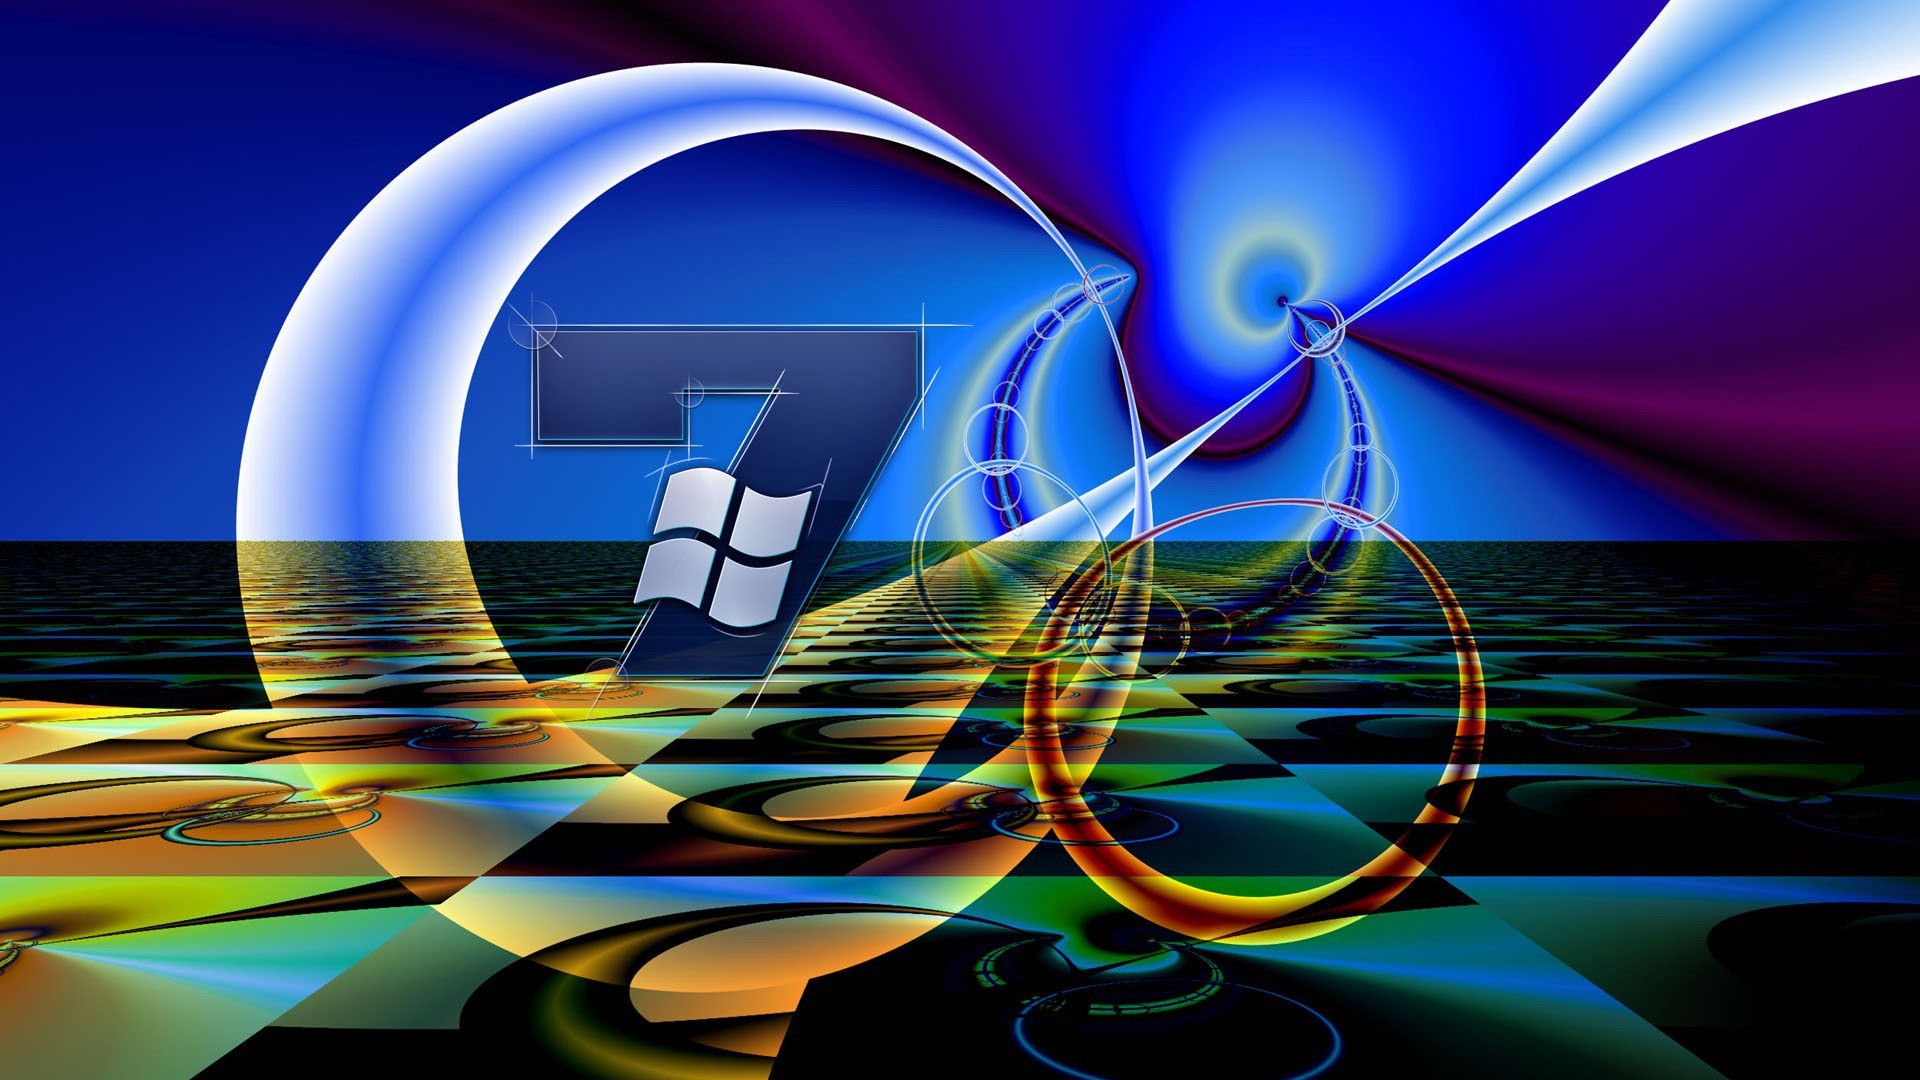 Microsoft Windows 7 Desktop Backgrounds (64+ images)